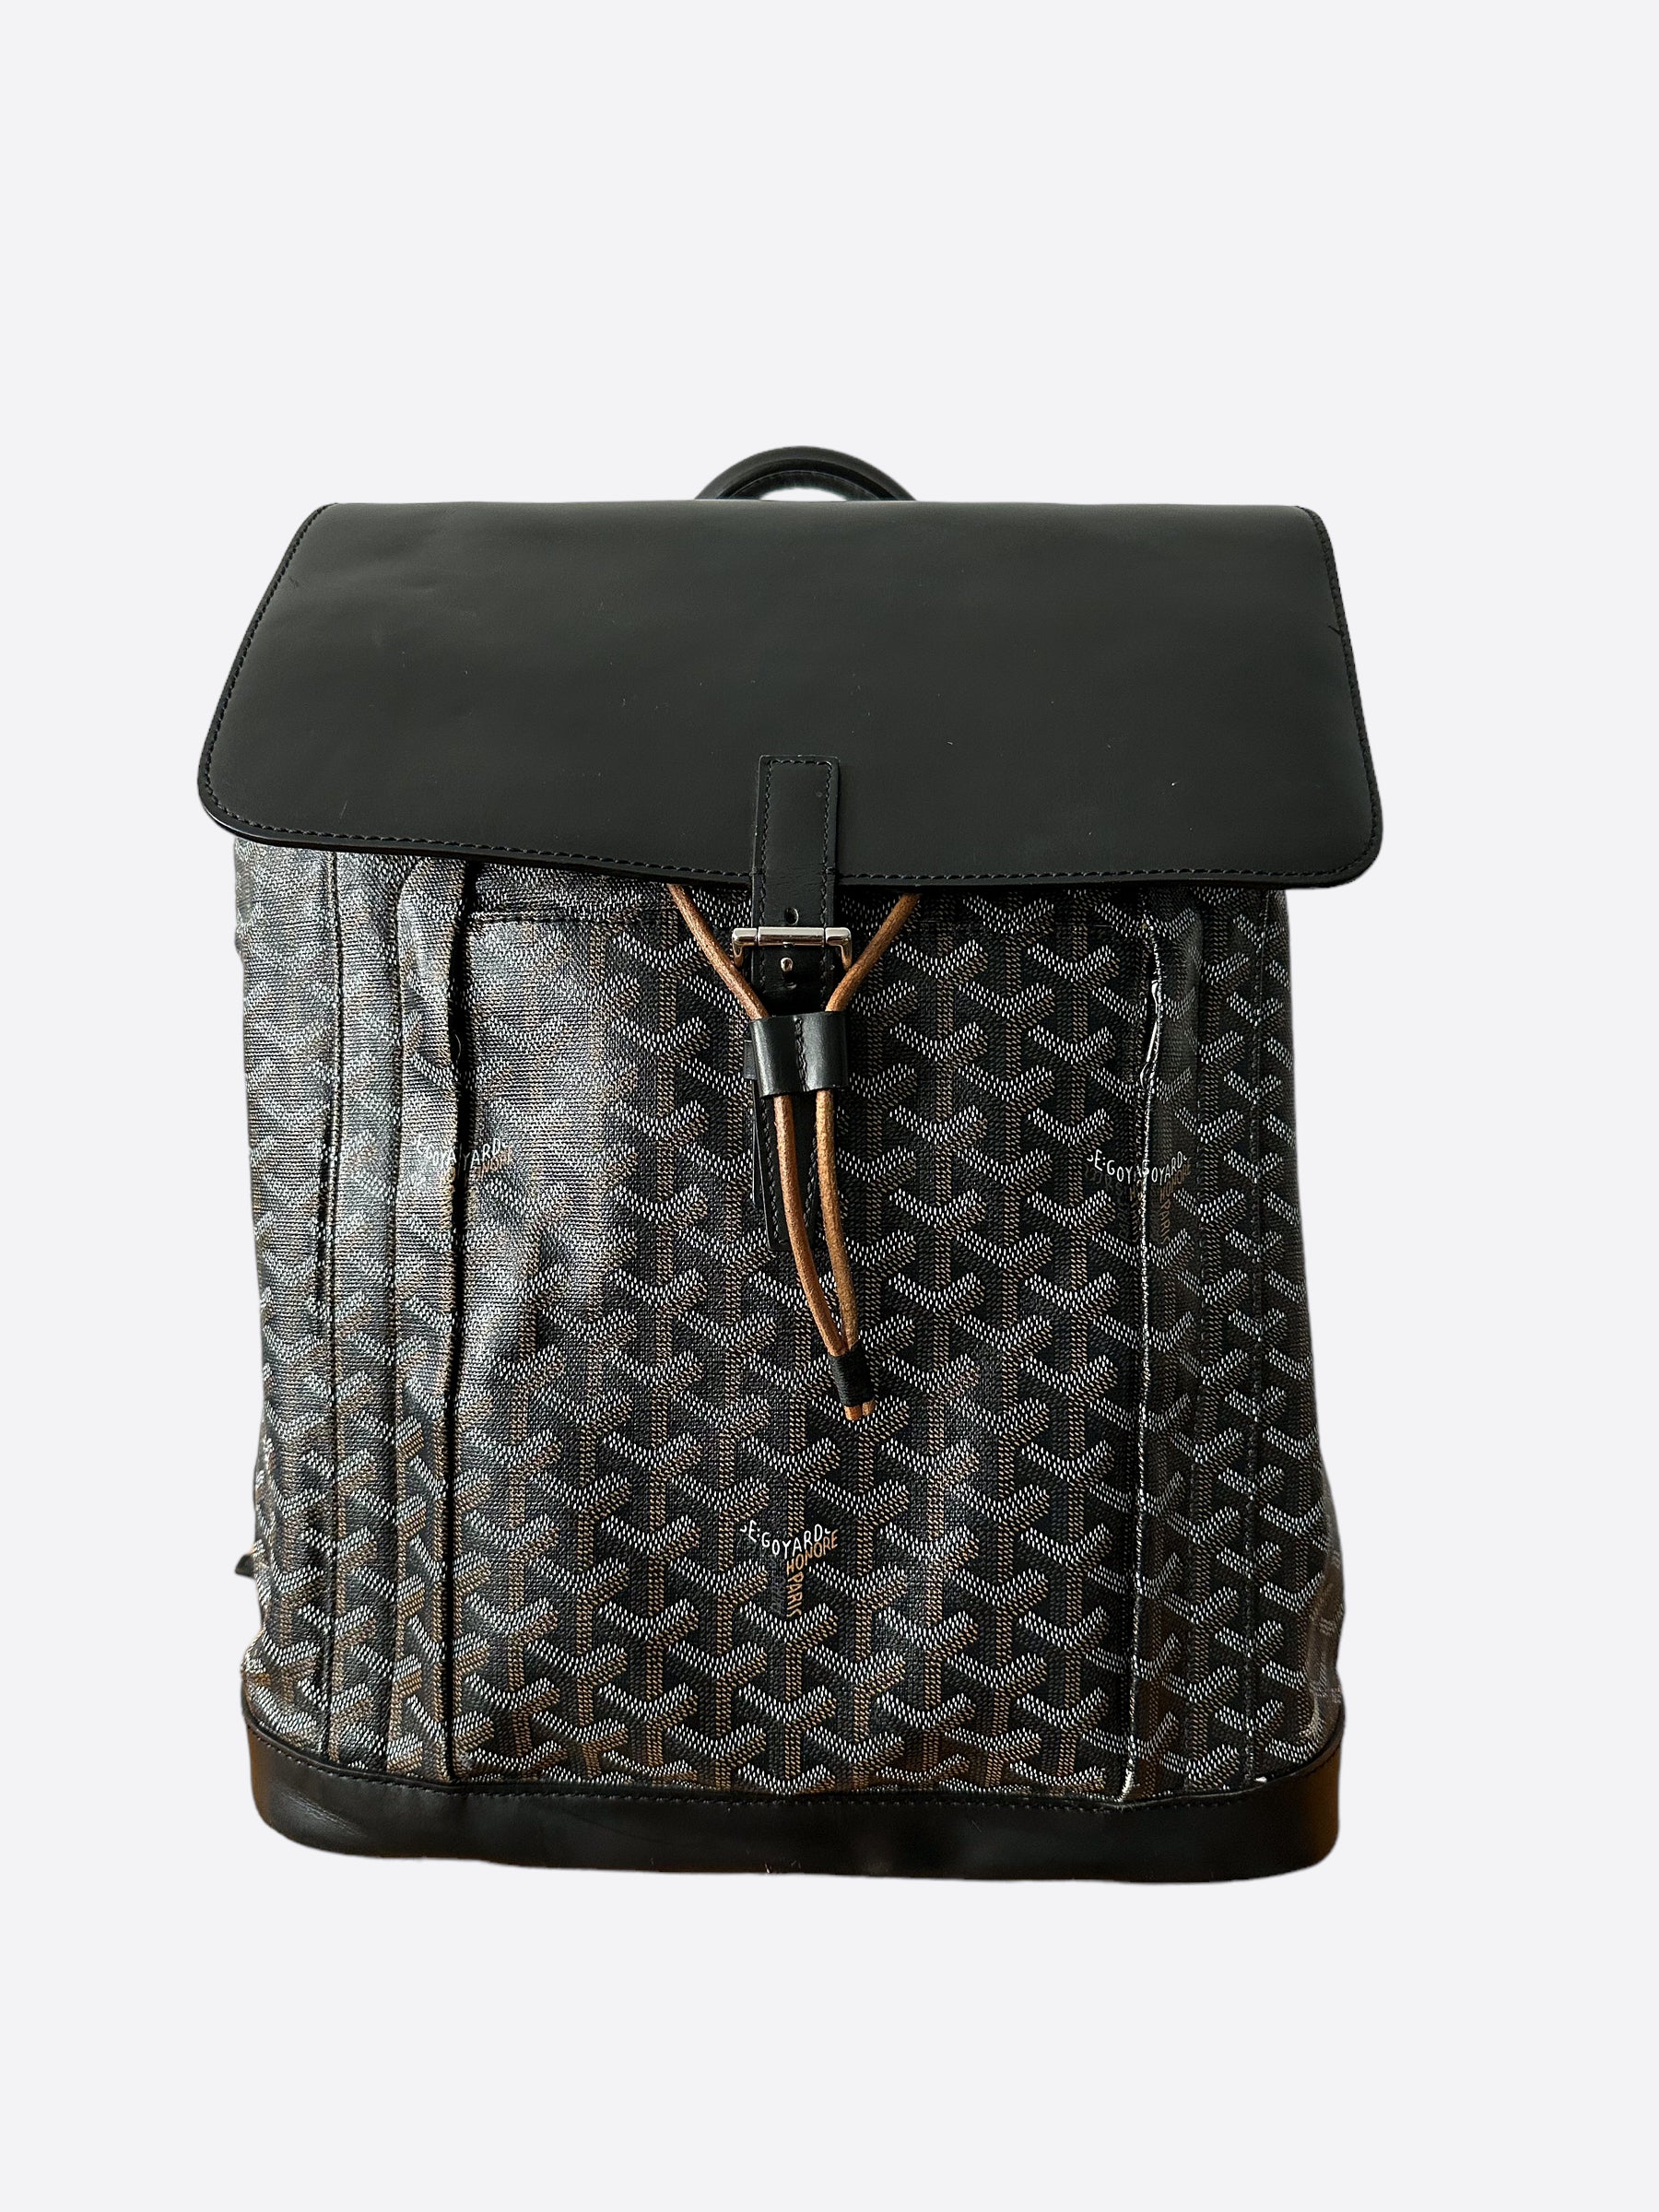 Shop GOYARD Alpin MM Backpack by mimiparfait